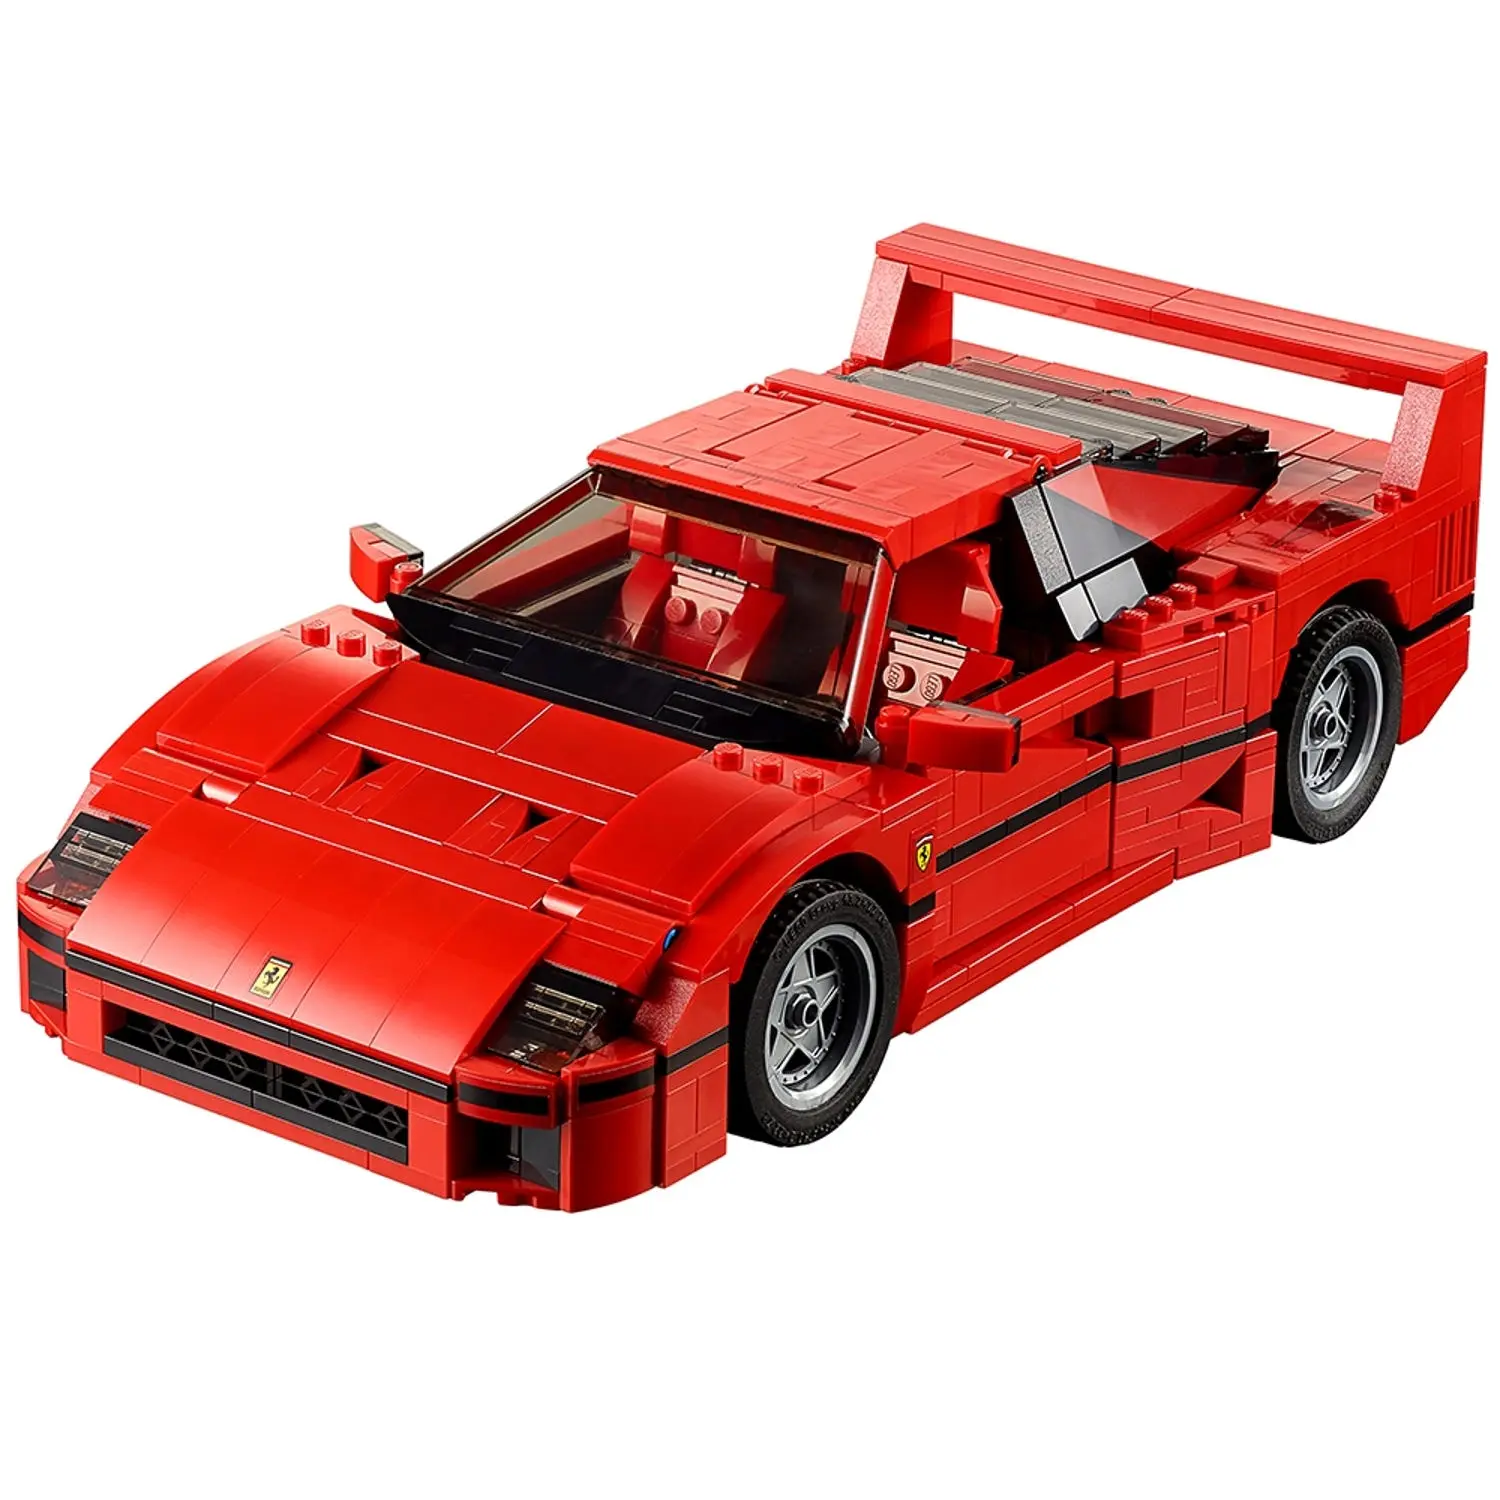 lego ferrari f40 wallpaper disambled - What is the Lego Ferrari F40 set number